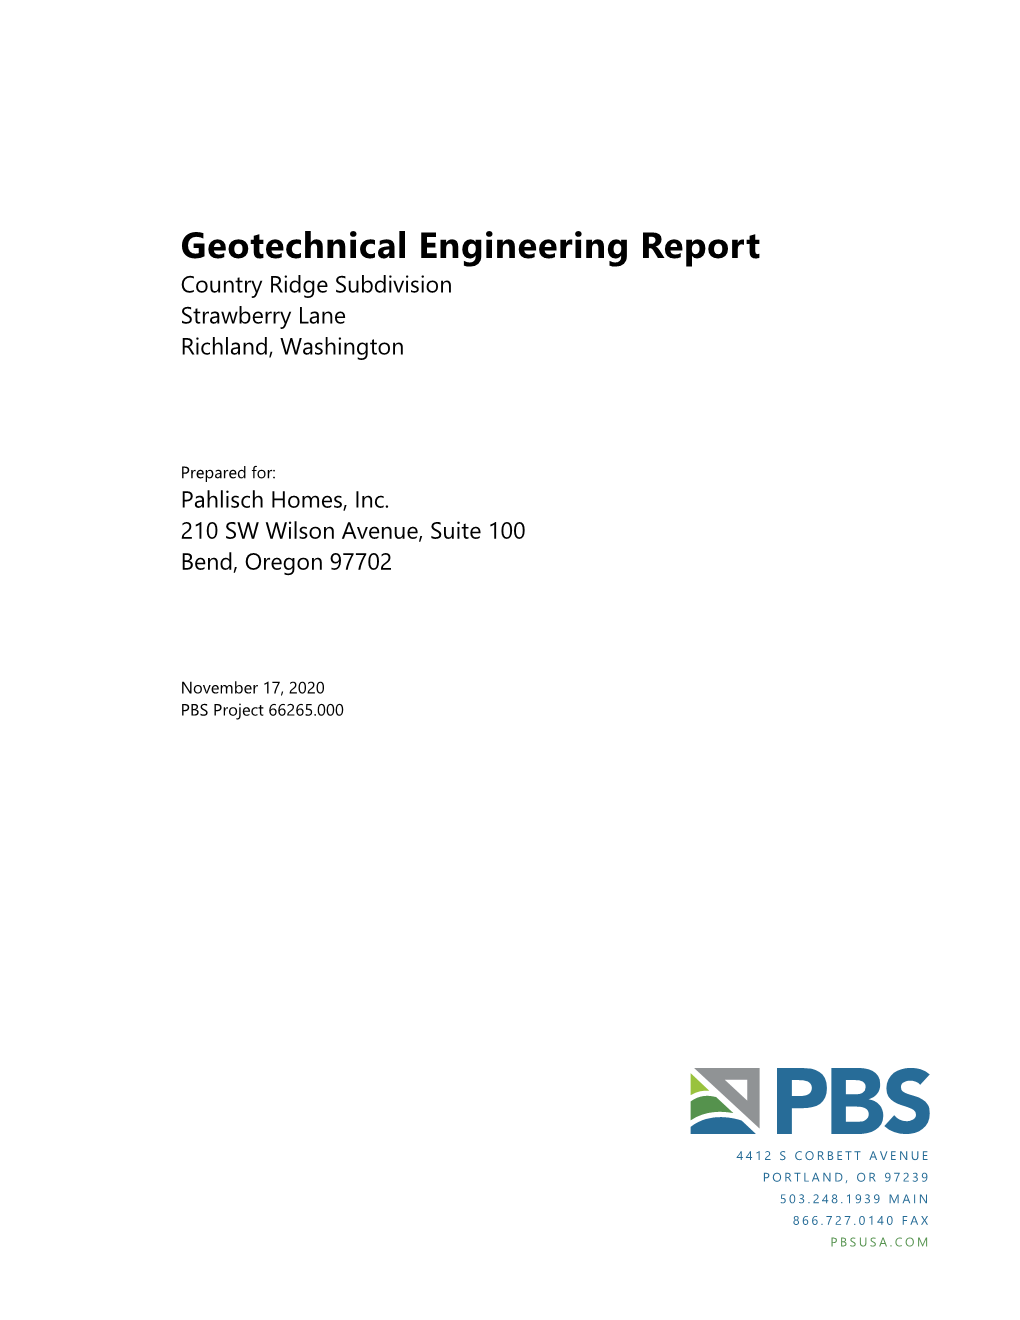 Geotechnical Engineering Report Country Ridge Subdivision Strawberry Lane Richland, Washington